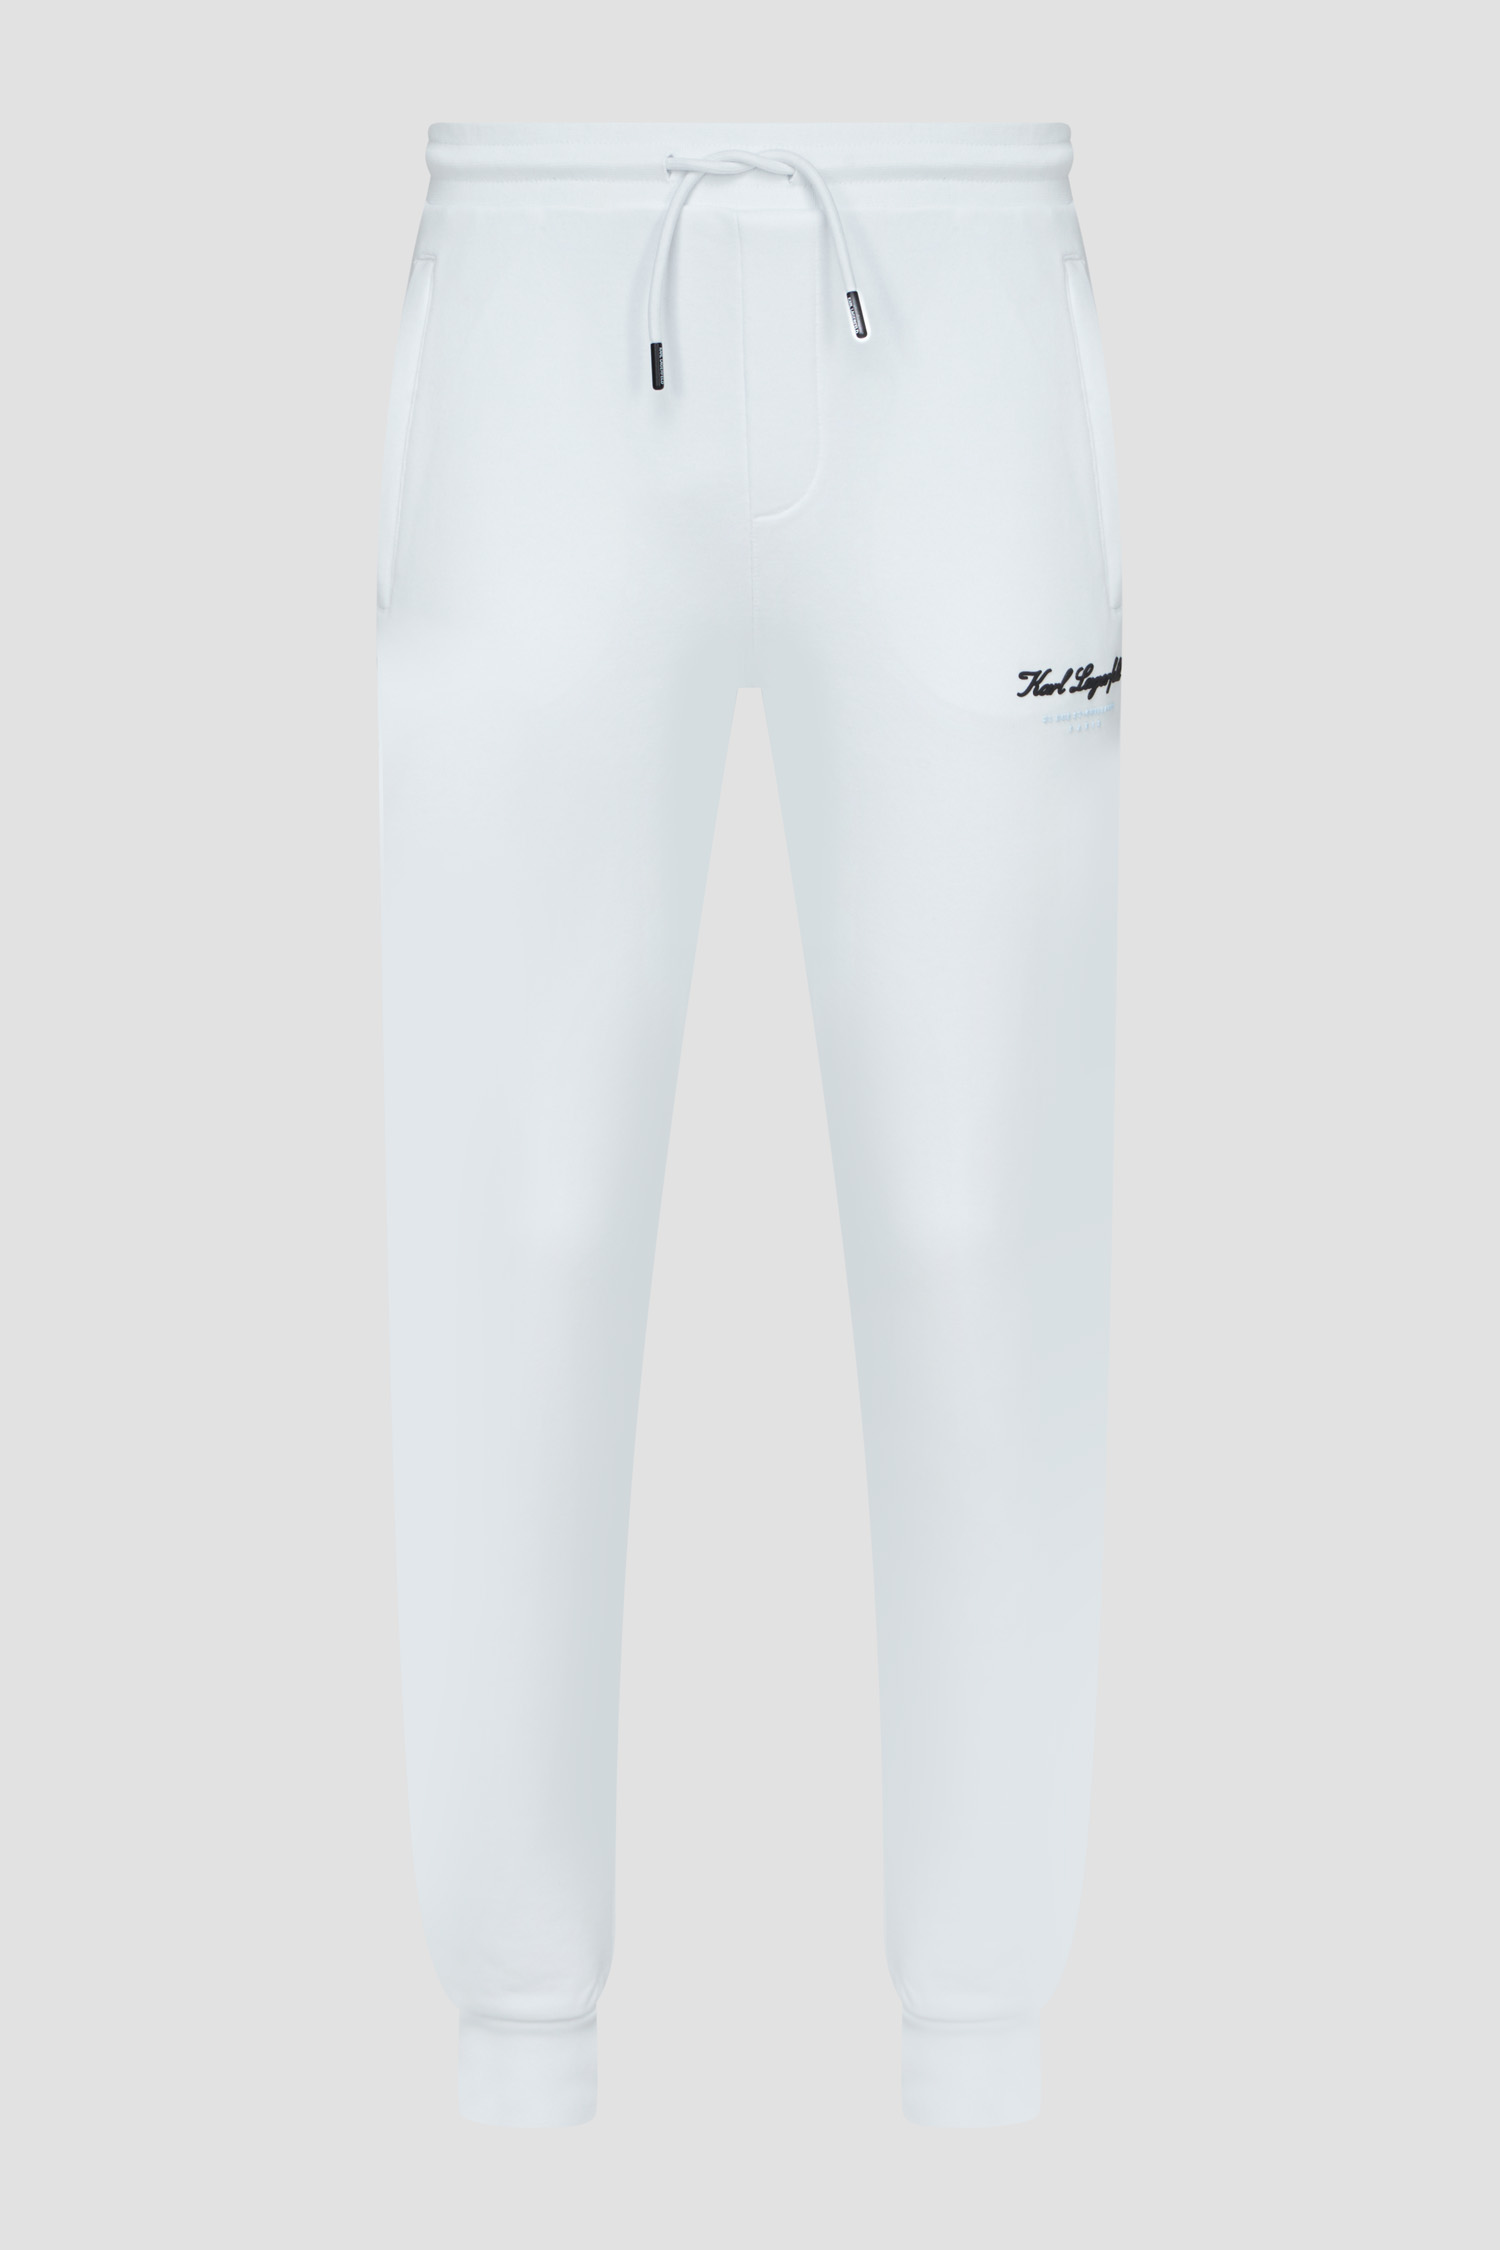 Мужские белые спортивные брюки Karl Lagerfeld 541900.705406;10